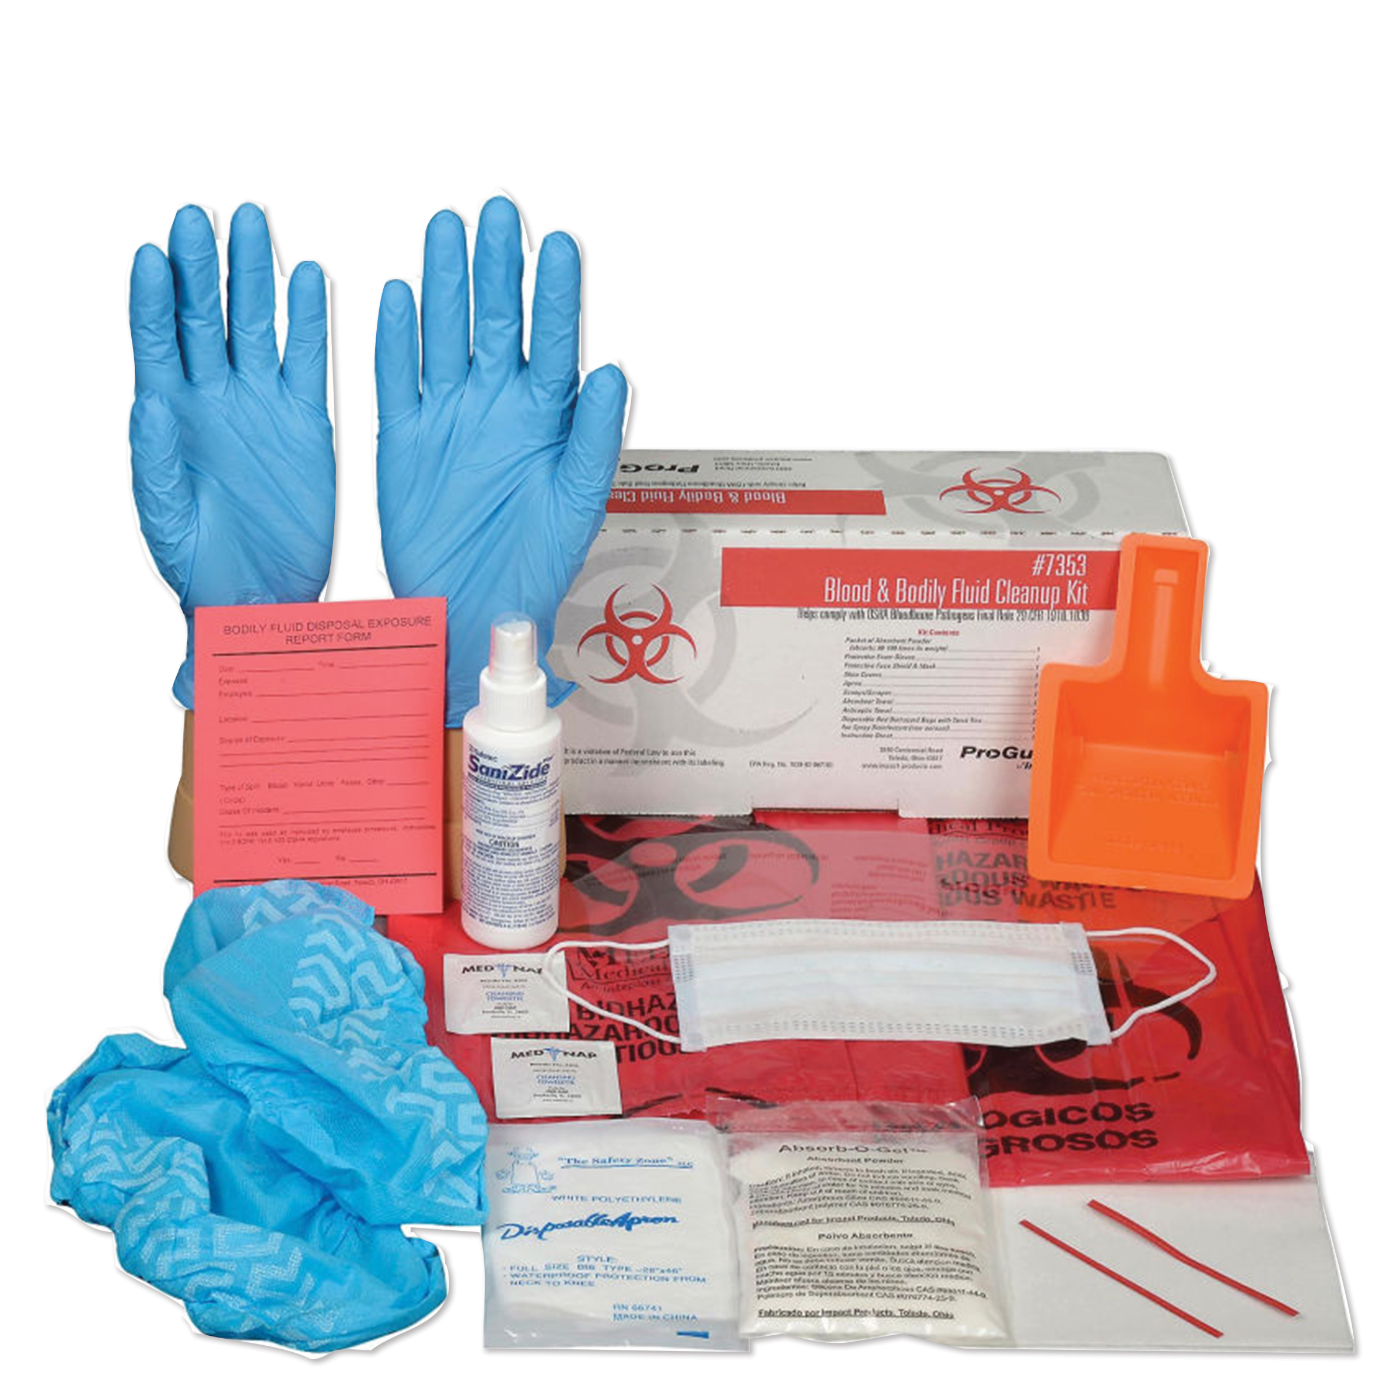 Blood & Bodily Fluid Cleanup Kit